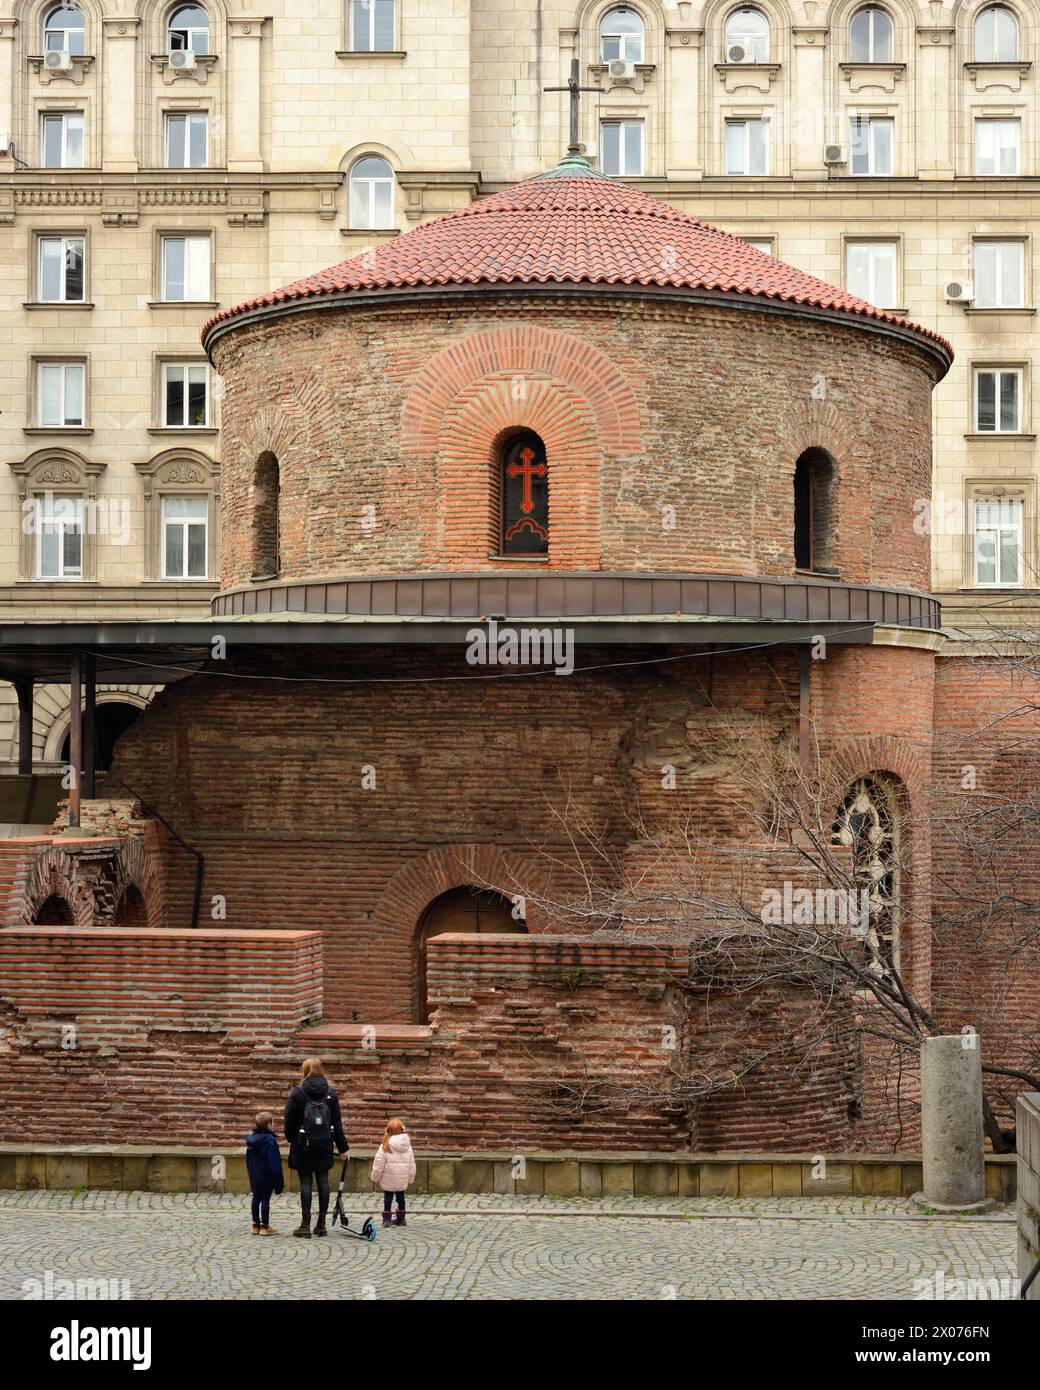 The St.George Church 3rd century Rotunda as the oldest building and sightseeing landmark in Sofia Bulgaria, Eastern Europe, Balkans, EU Stock Photo